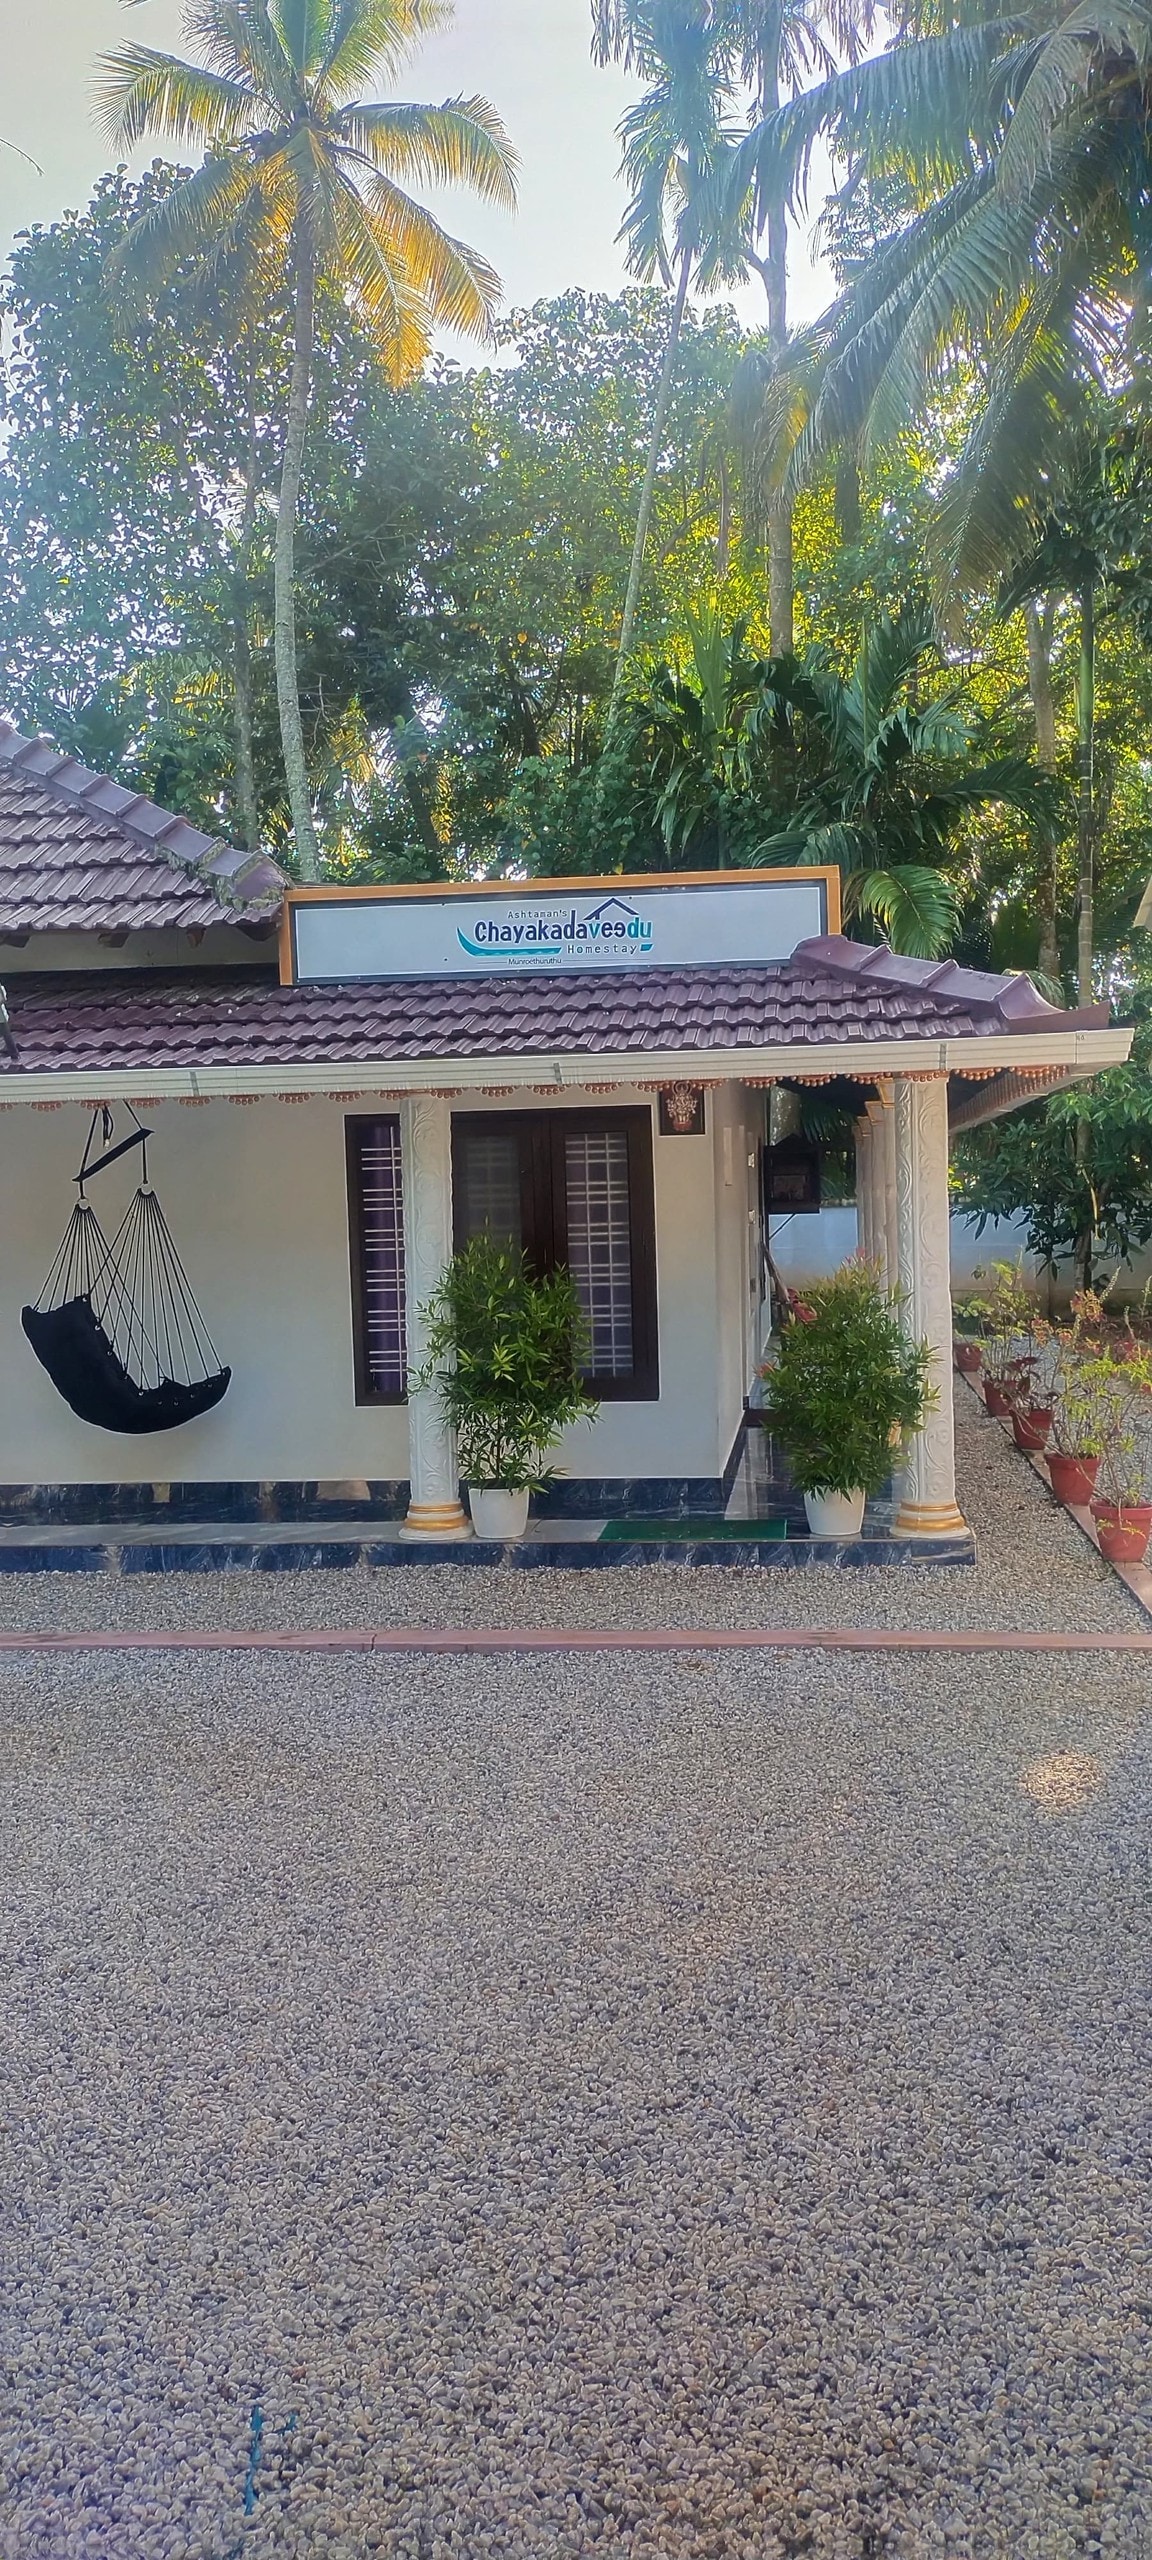 Ashtaman's Chayakadaveedu Villa